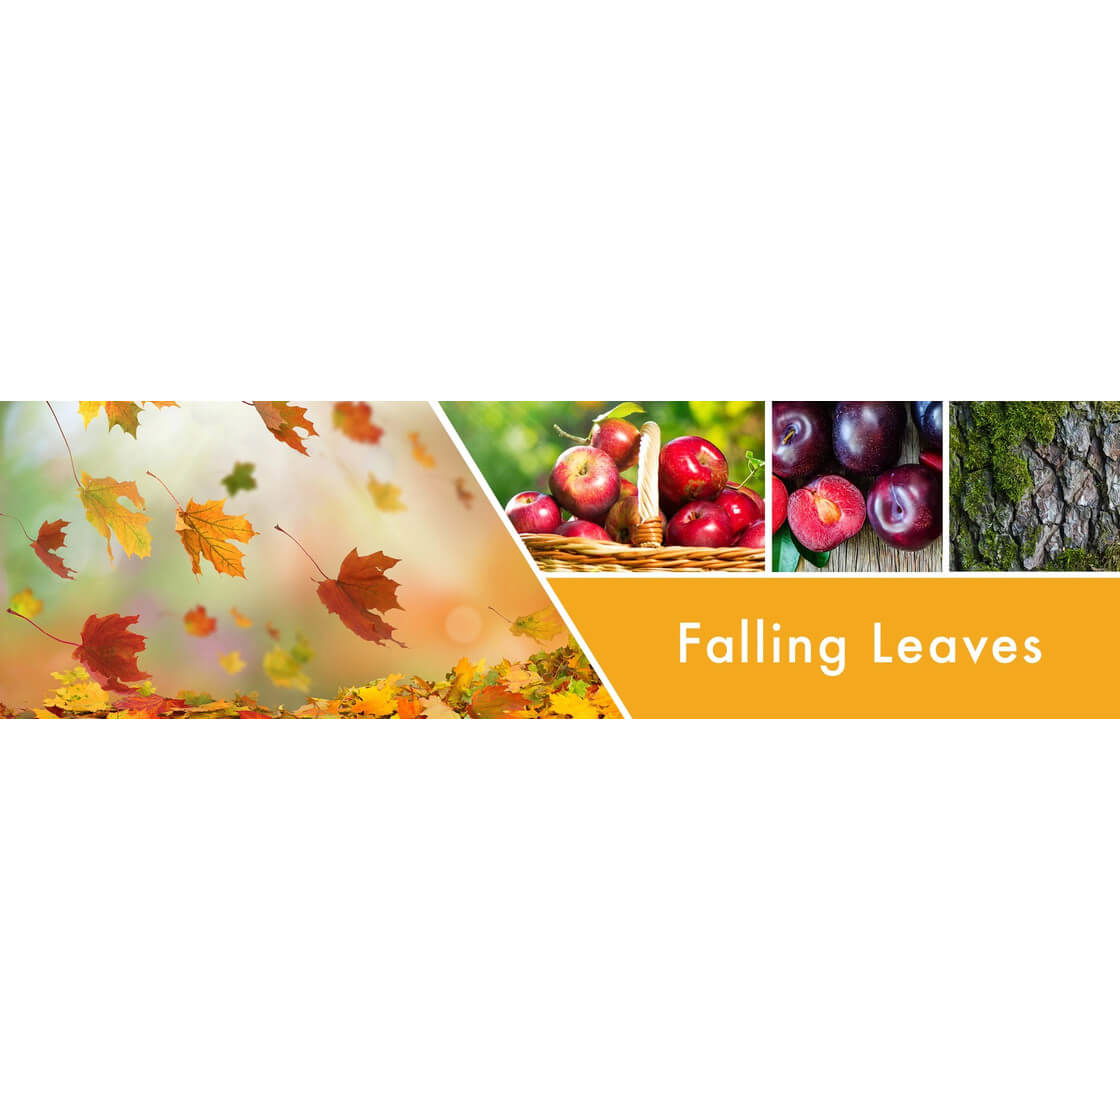 Falling Leaves 453g